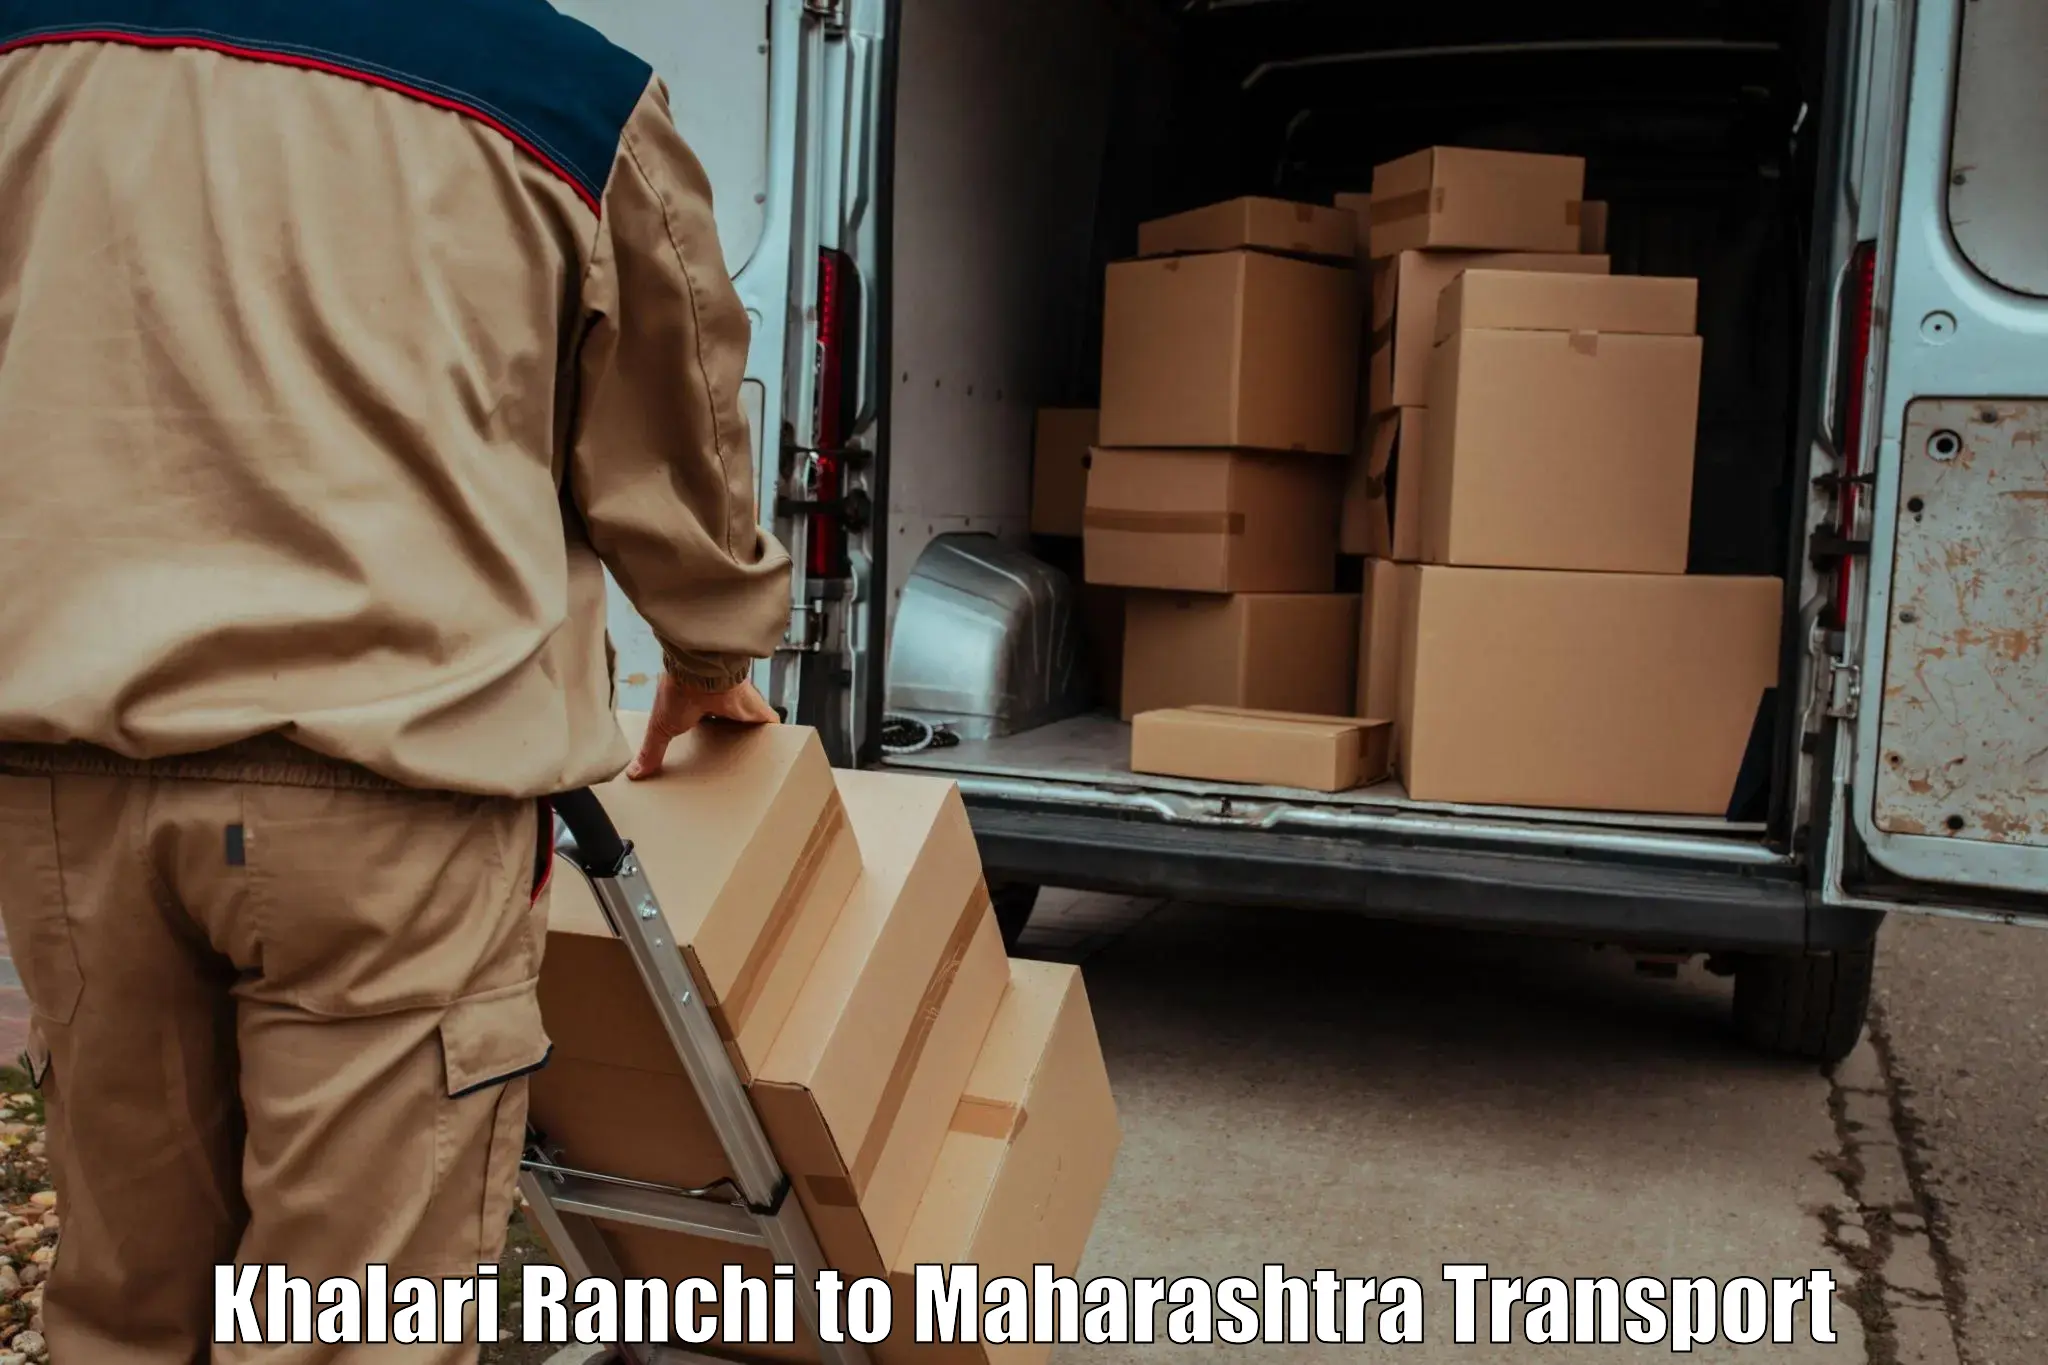 Furniture transport service Khalari Ranchi to Shahada